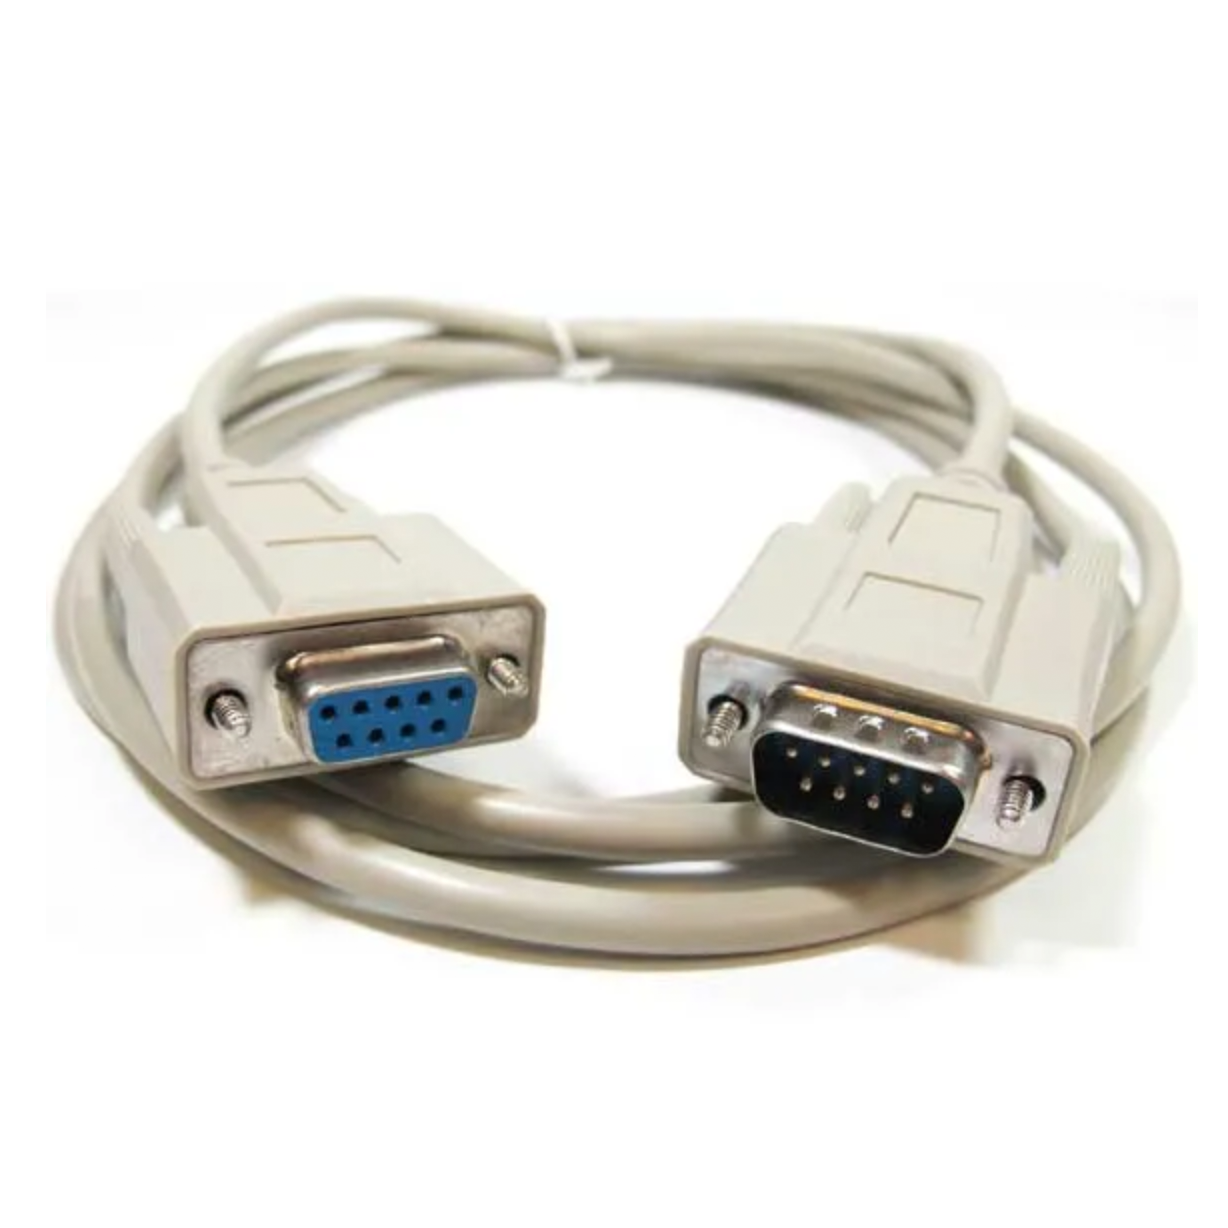 FidgetGear DB9 Female DB15 Male RS232 Serial Port Interface Modem Cable Cord